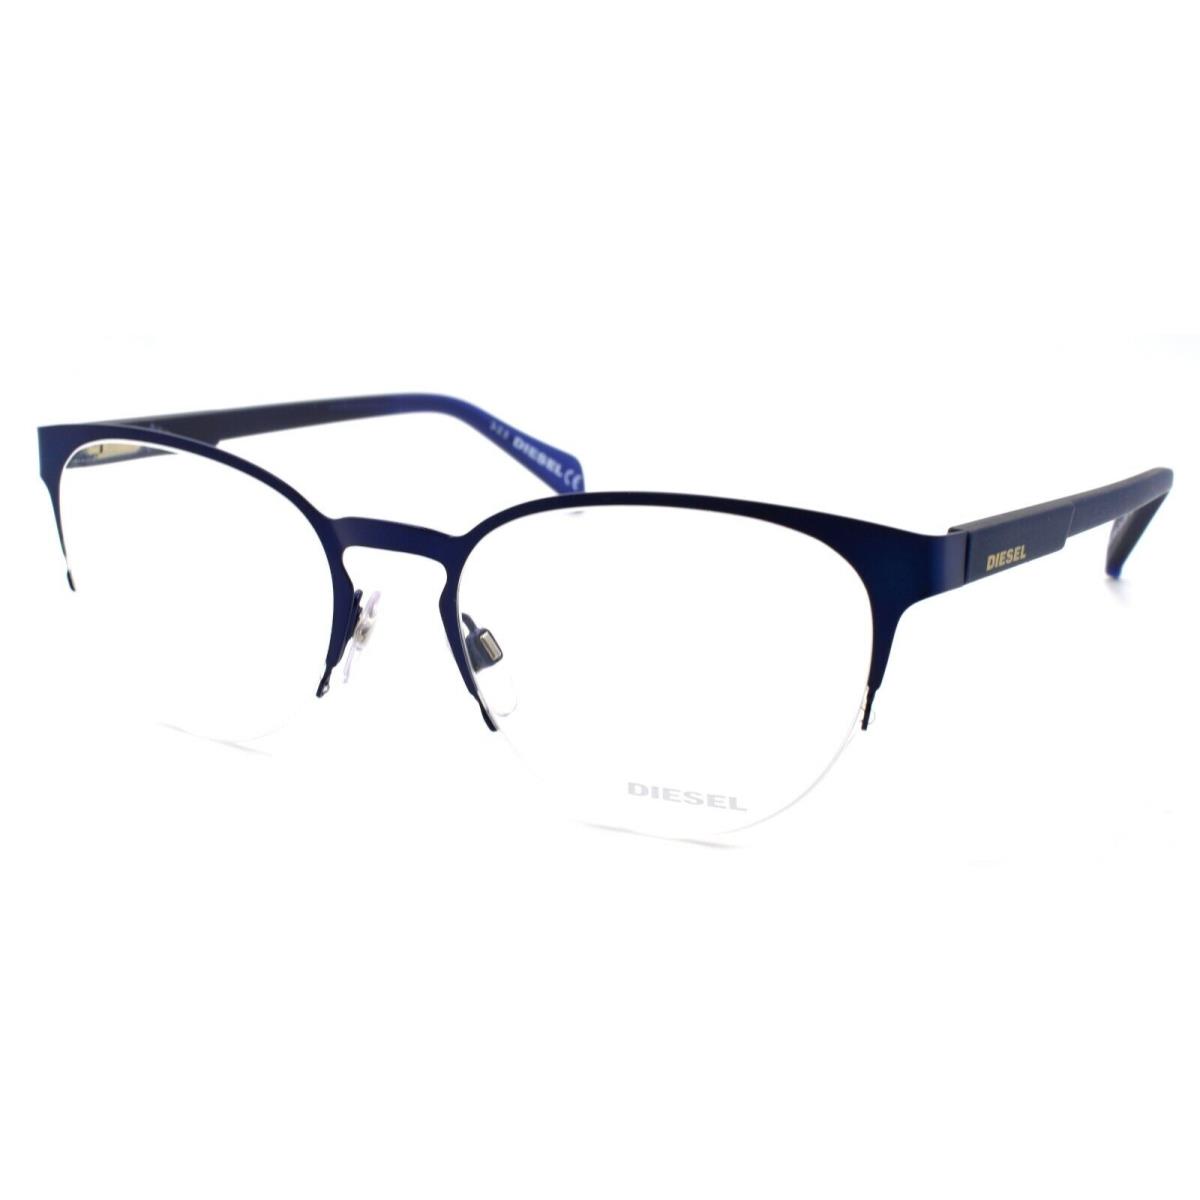 Diesel DL5158 091 Unisex Eyeglasses Frames Half Rim 52-19-145 Matte Blue